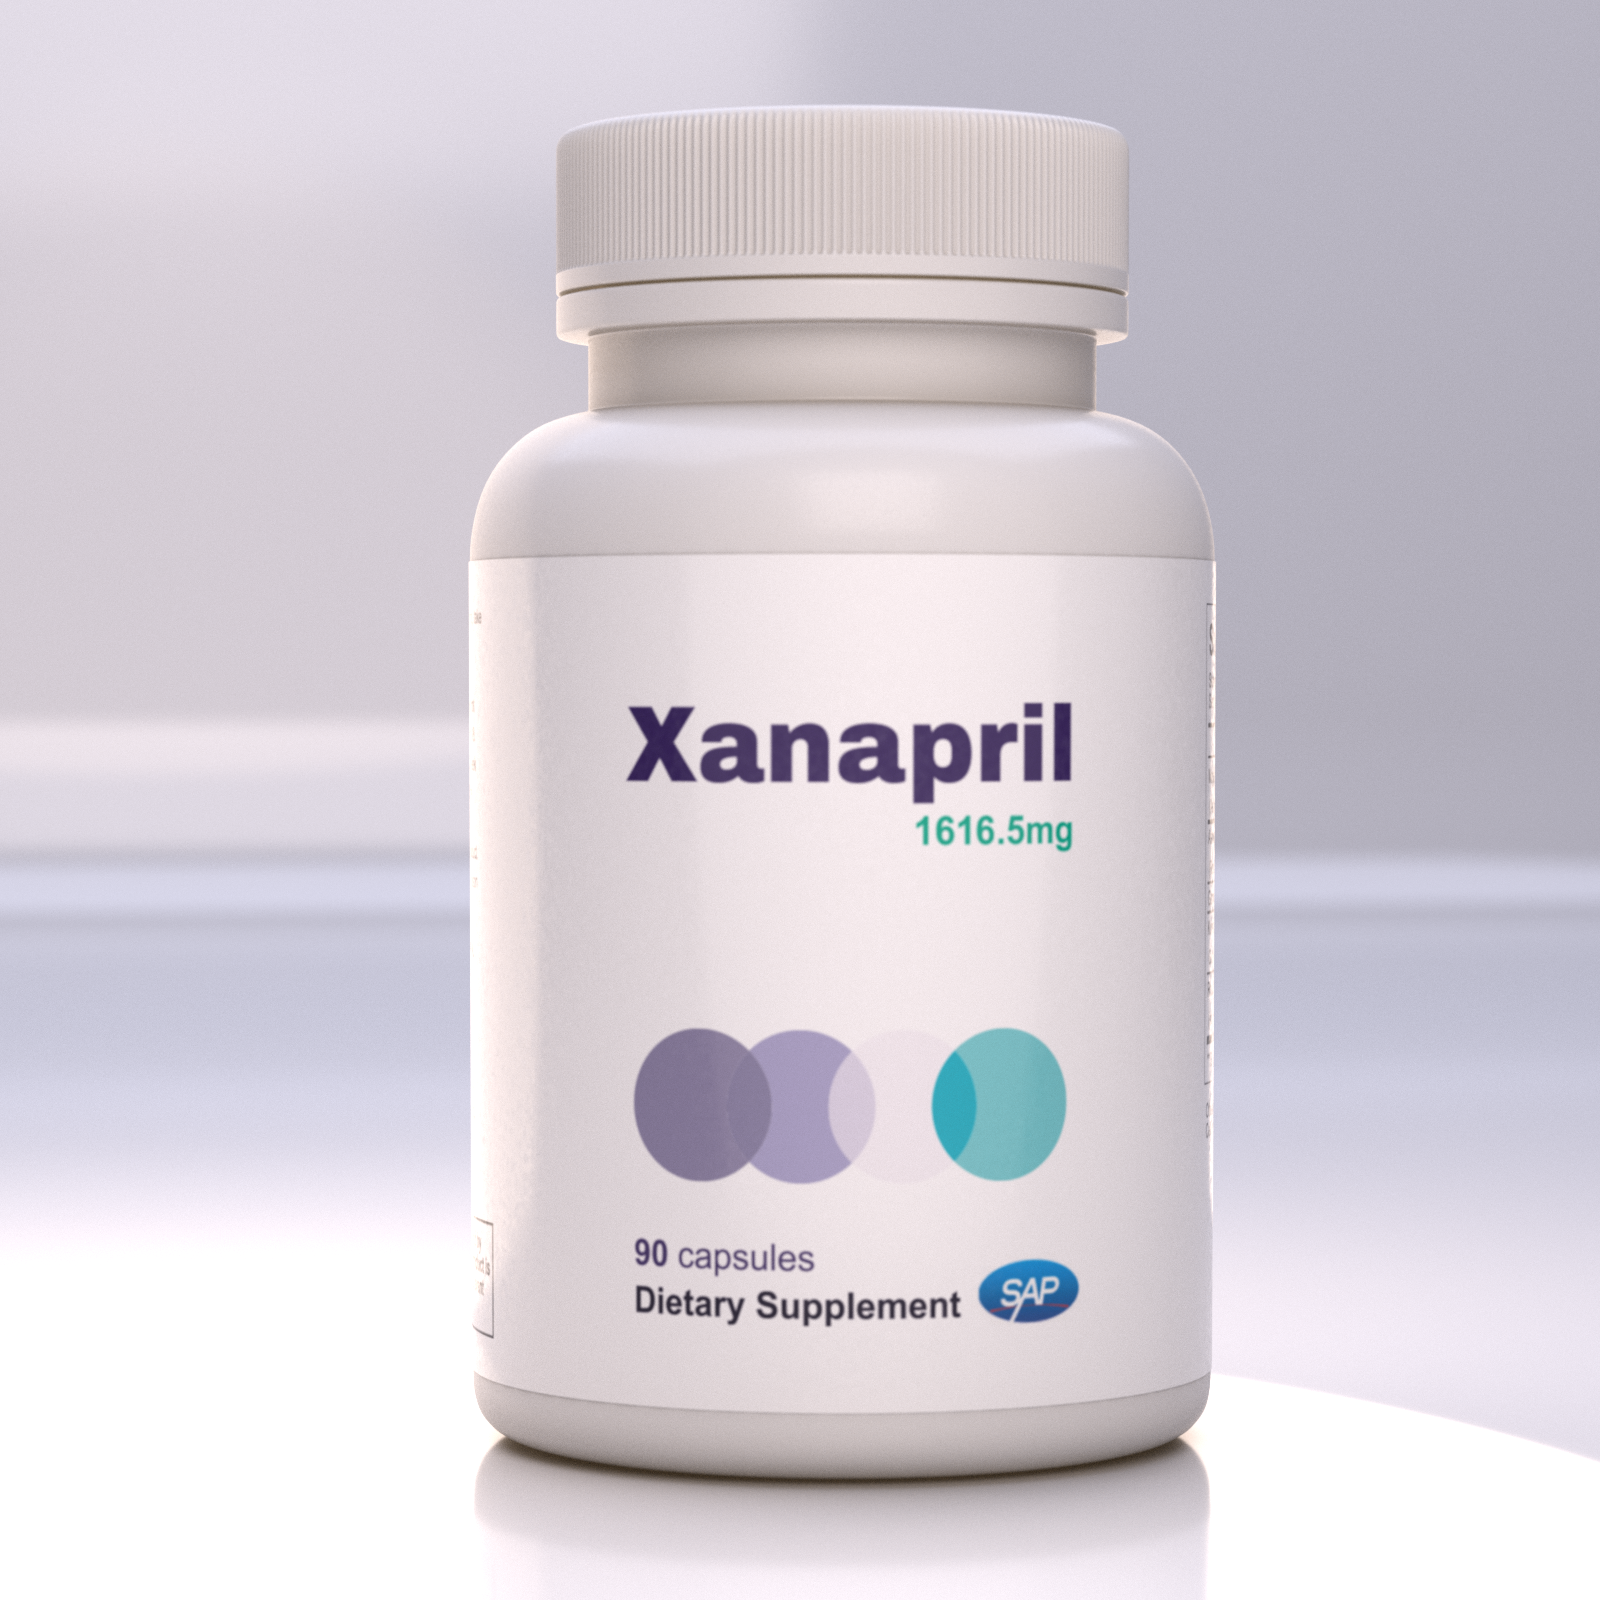 Xanapril anxiety nootropic